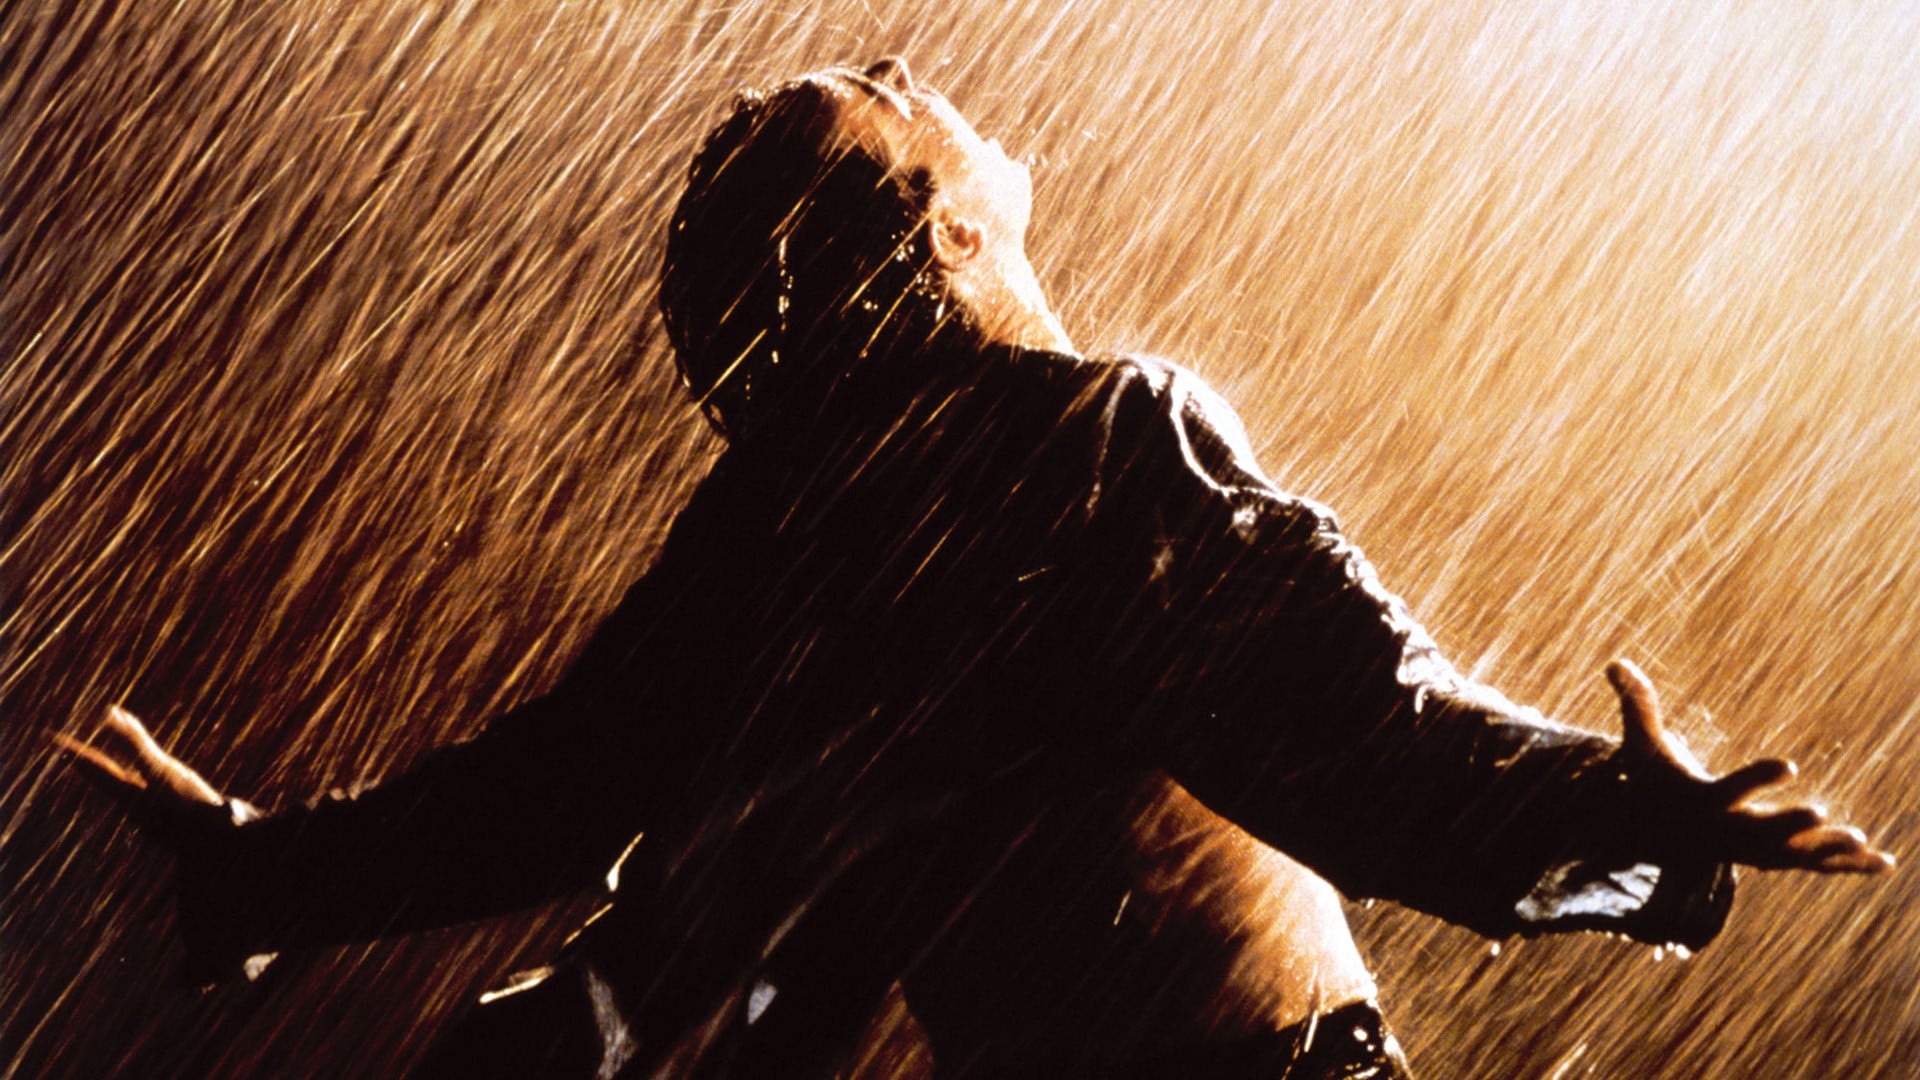 The Shawshank Redemption ชอว์แชงค์ มิตรภาพ ความหวัง ความรุนแรง (1994)